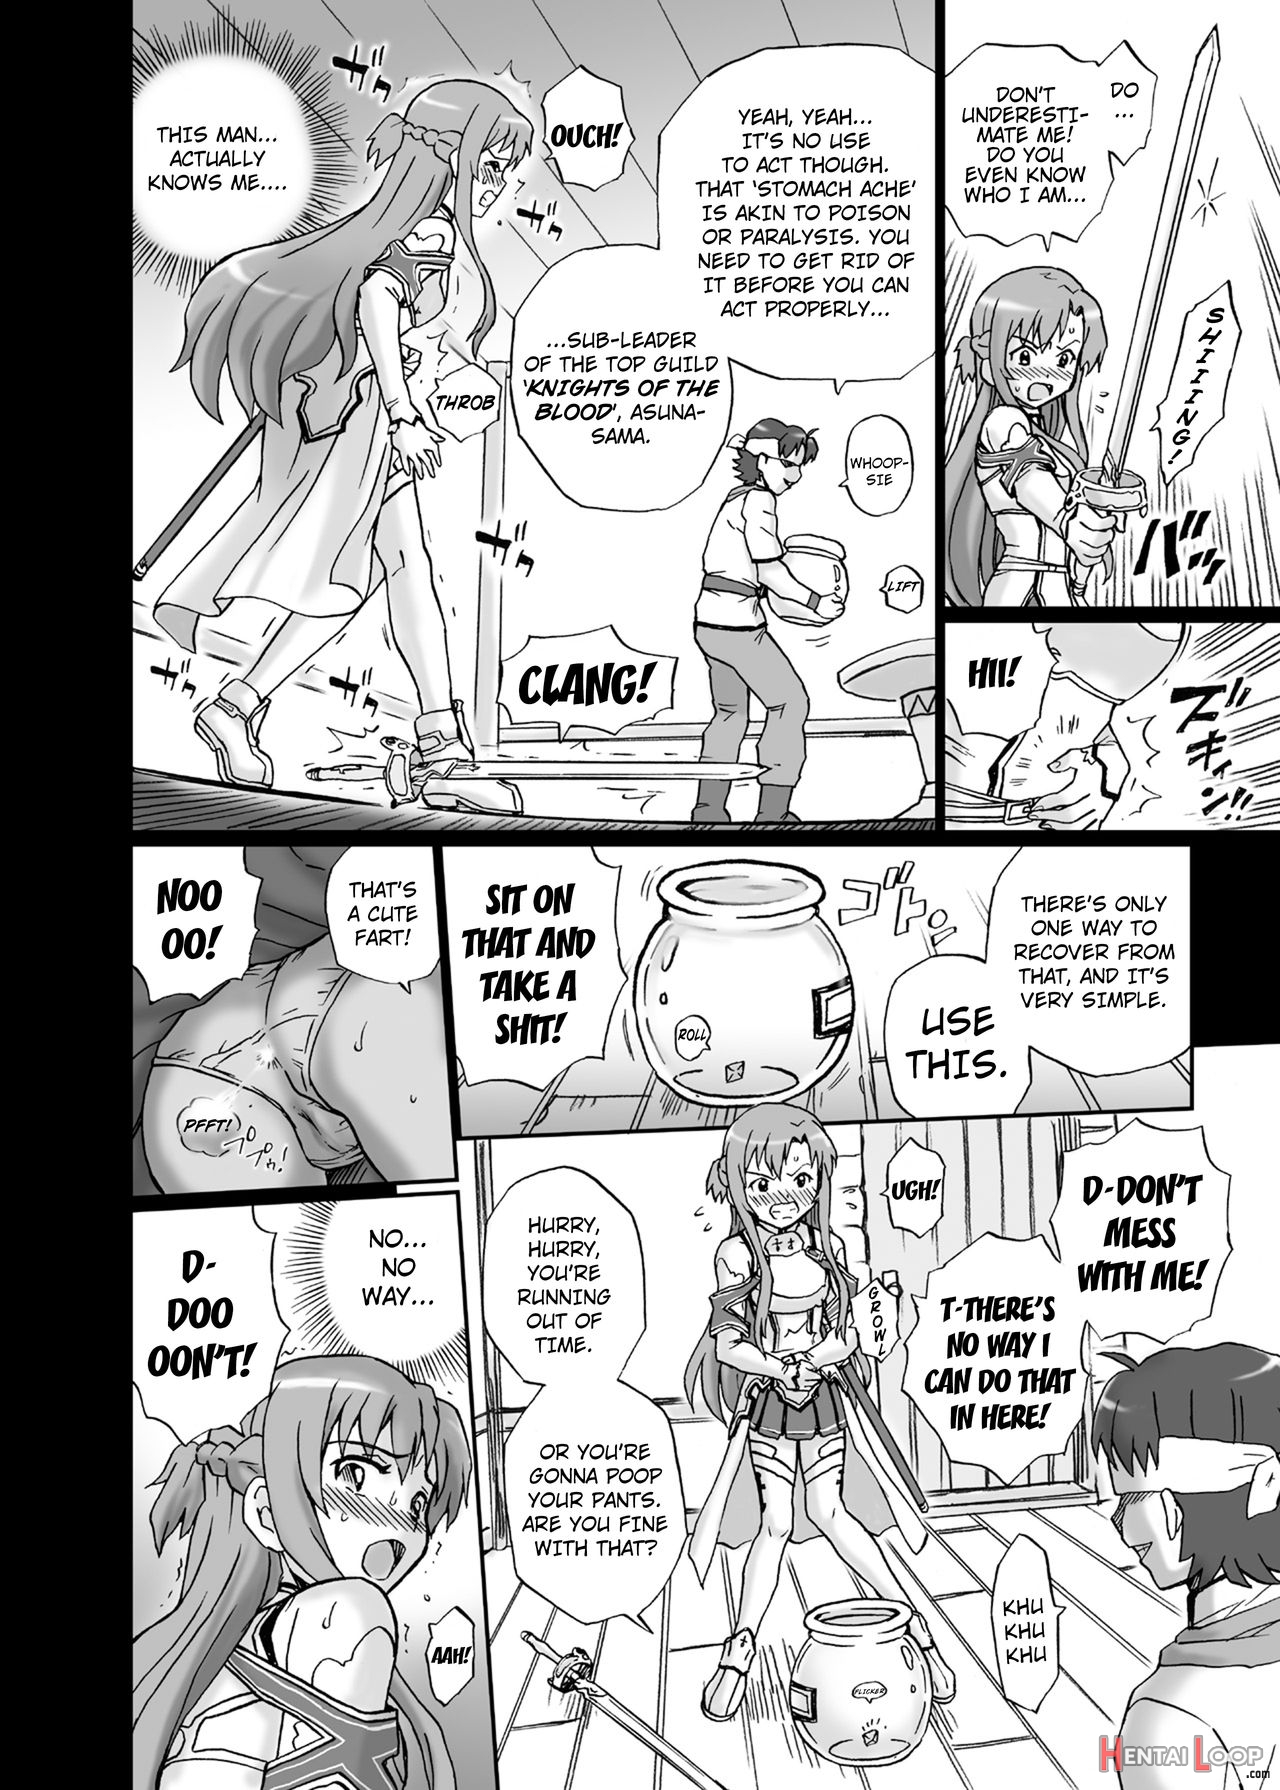 Tail-man Asuna Book page 7